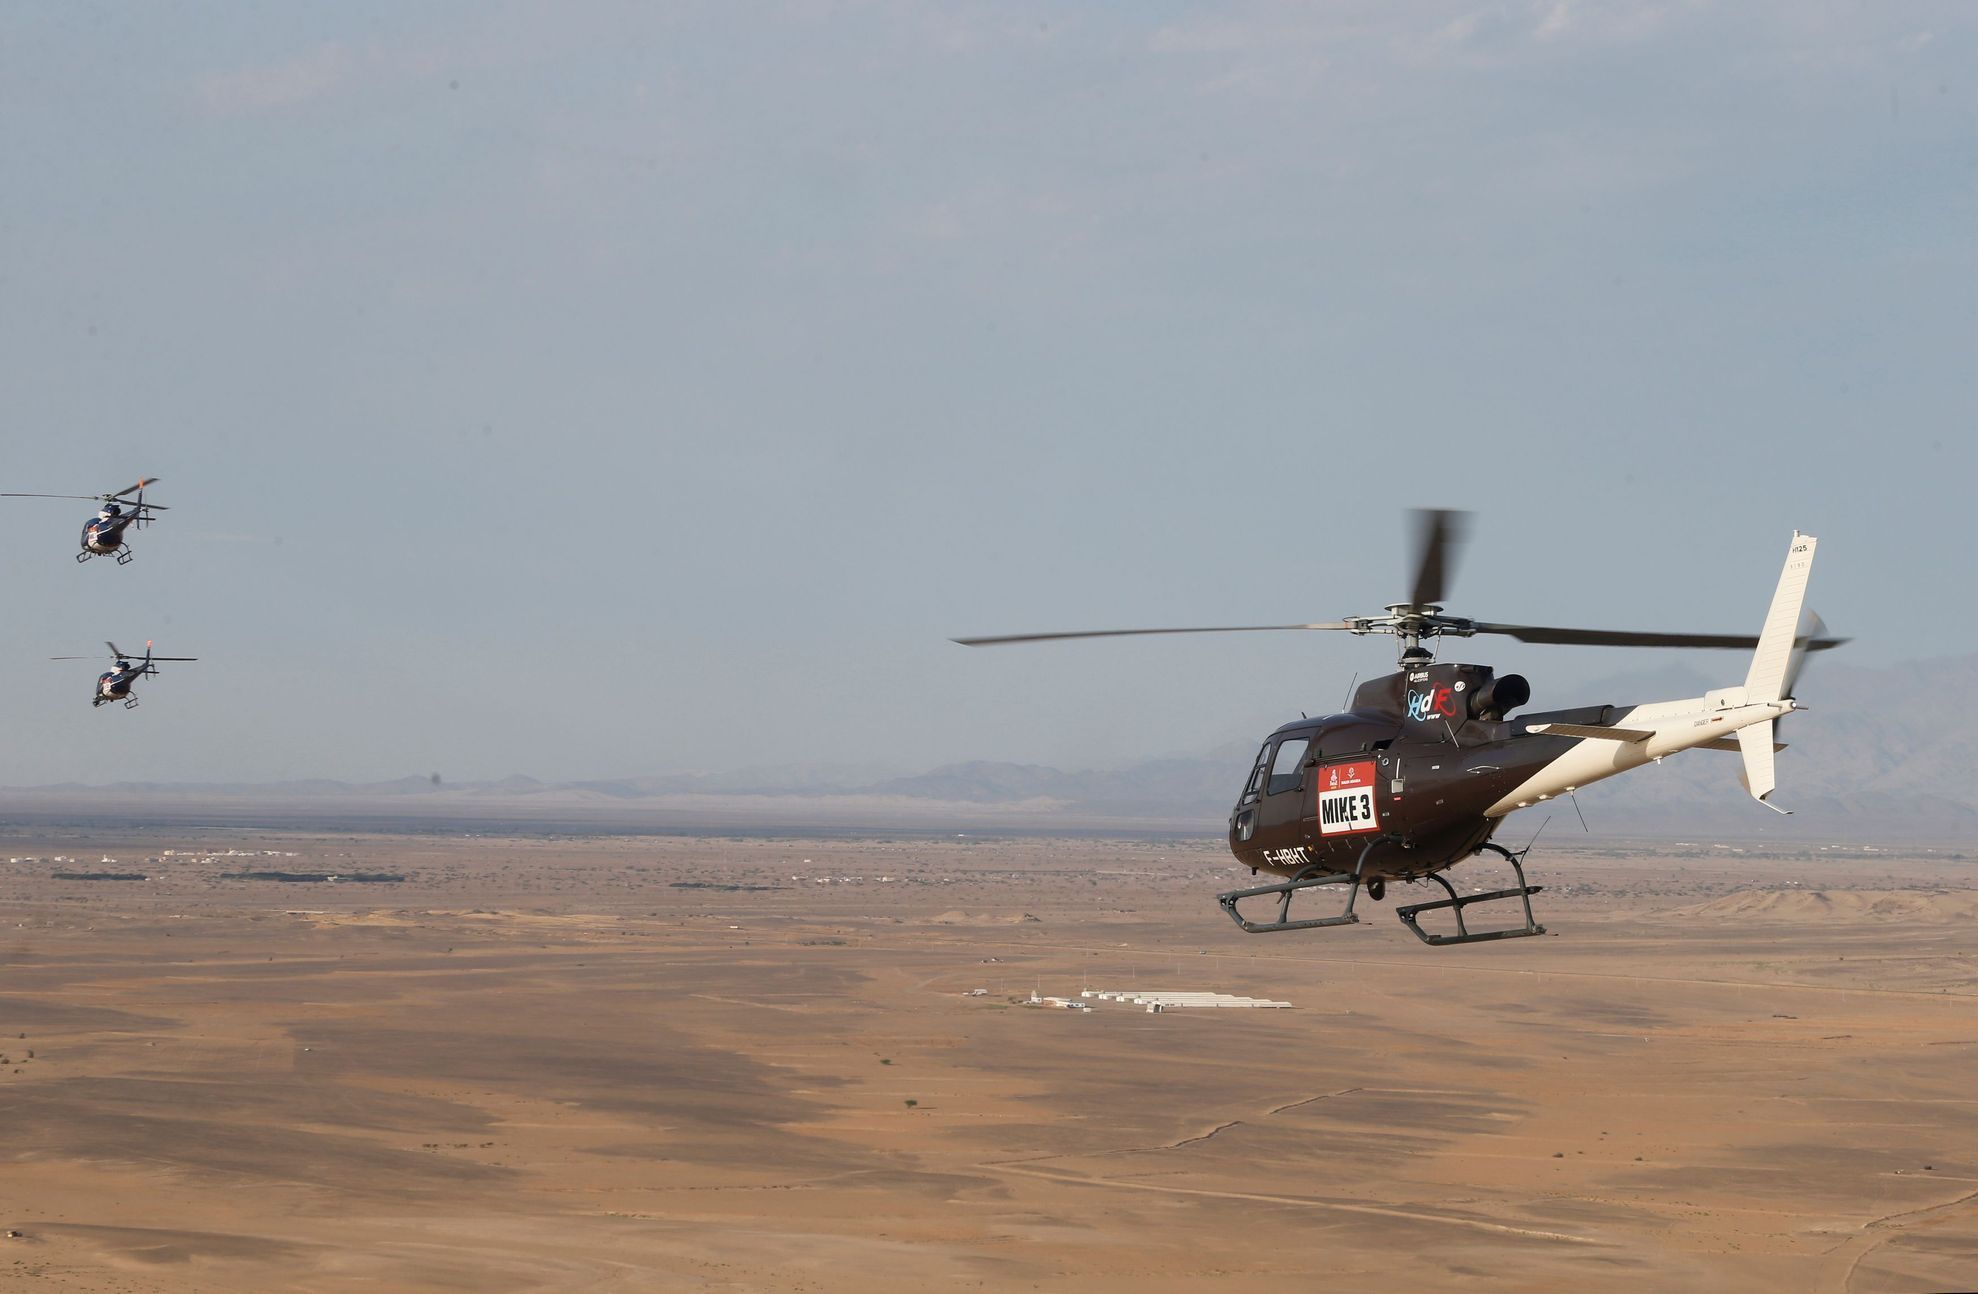 Rallye Dakar 2020, 1. etapa: vrtulníky